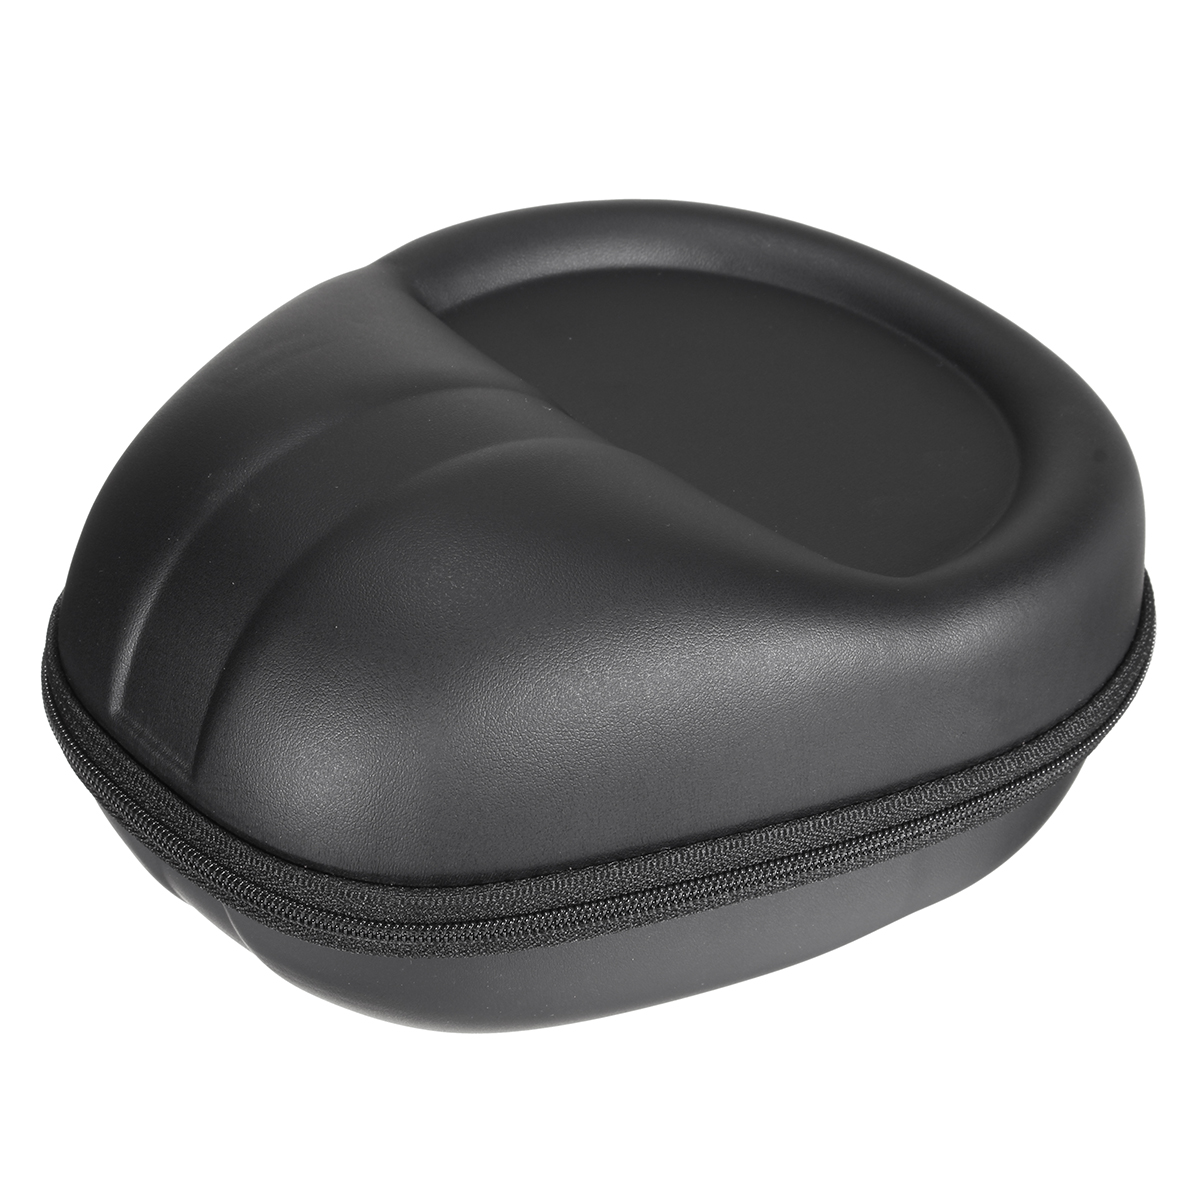 

Portable EVA Carrying Hard Case Bag Storage Box for Earphone Headphone Headset